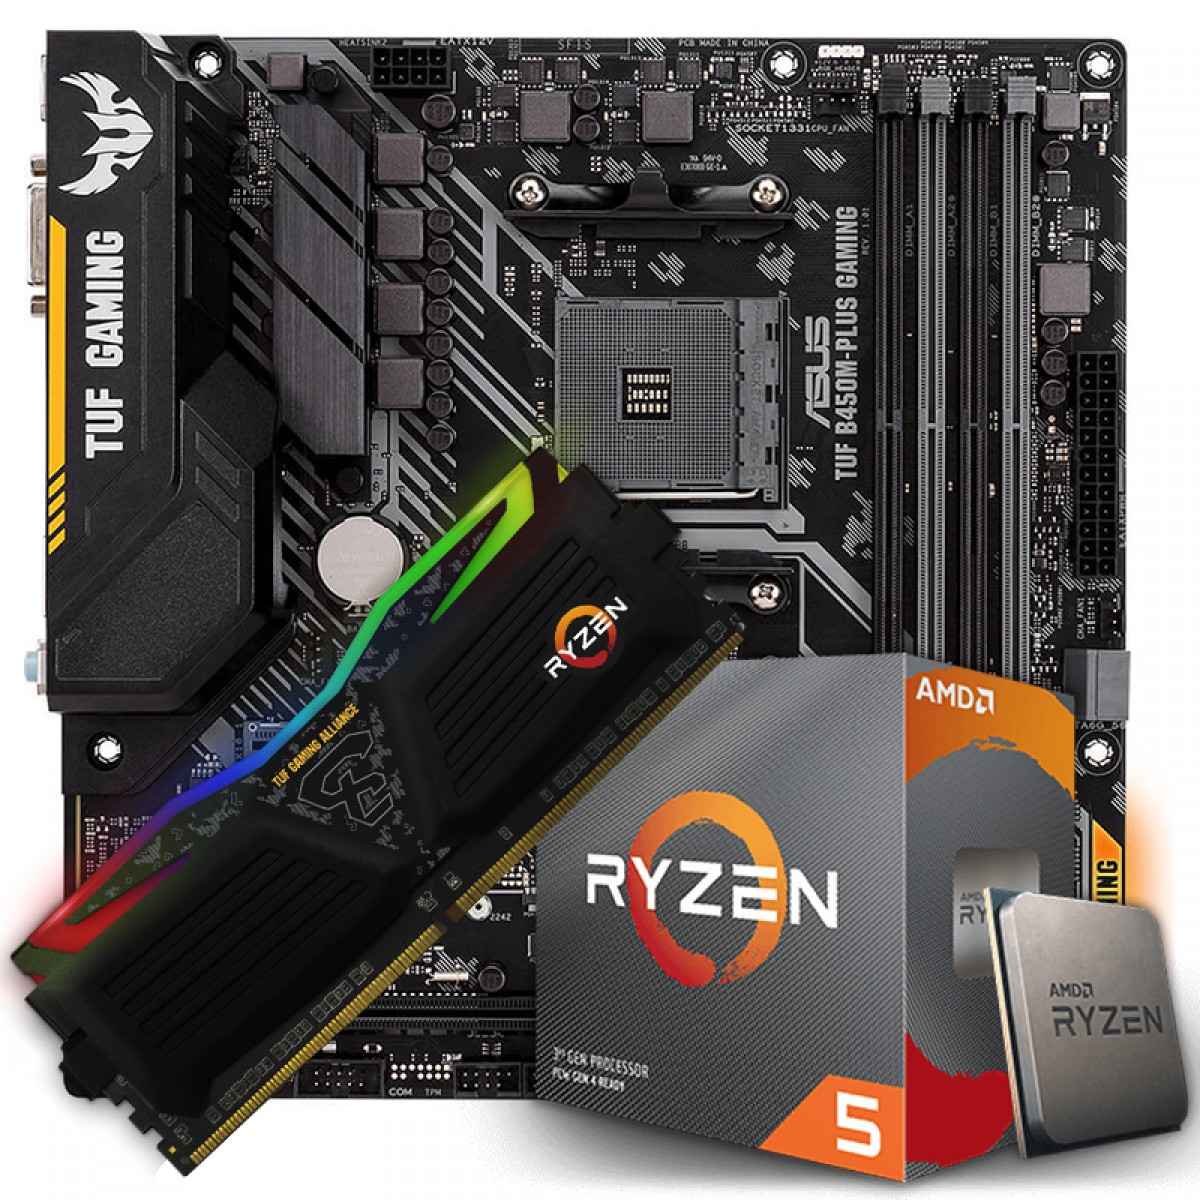 Kit Upgrade, AMD Ryzen 5 3600X, Asus TUF B450M-PLUS GAMING, Memória TUF DDR4 8GB 3000MHz